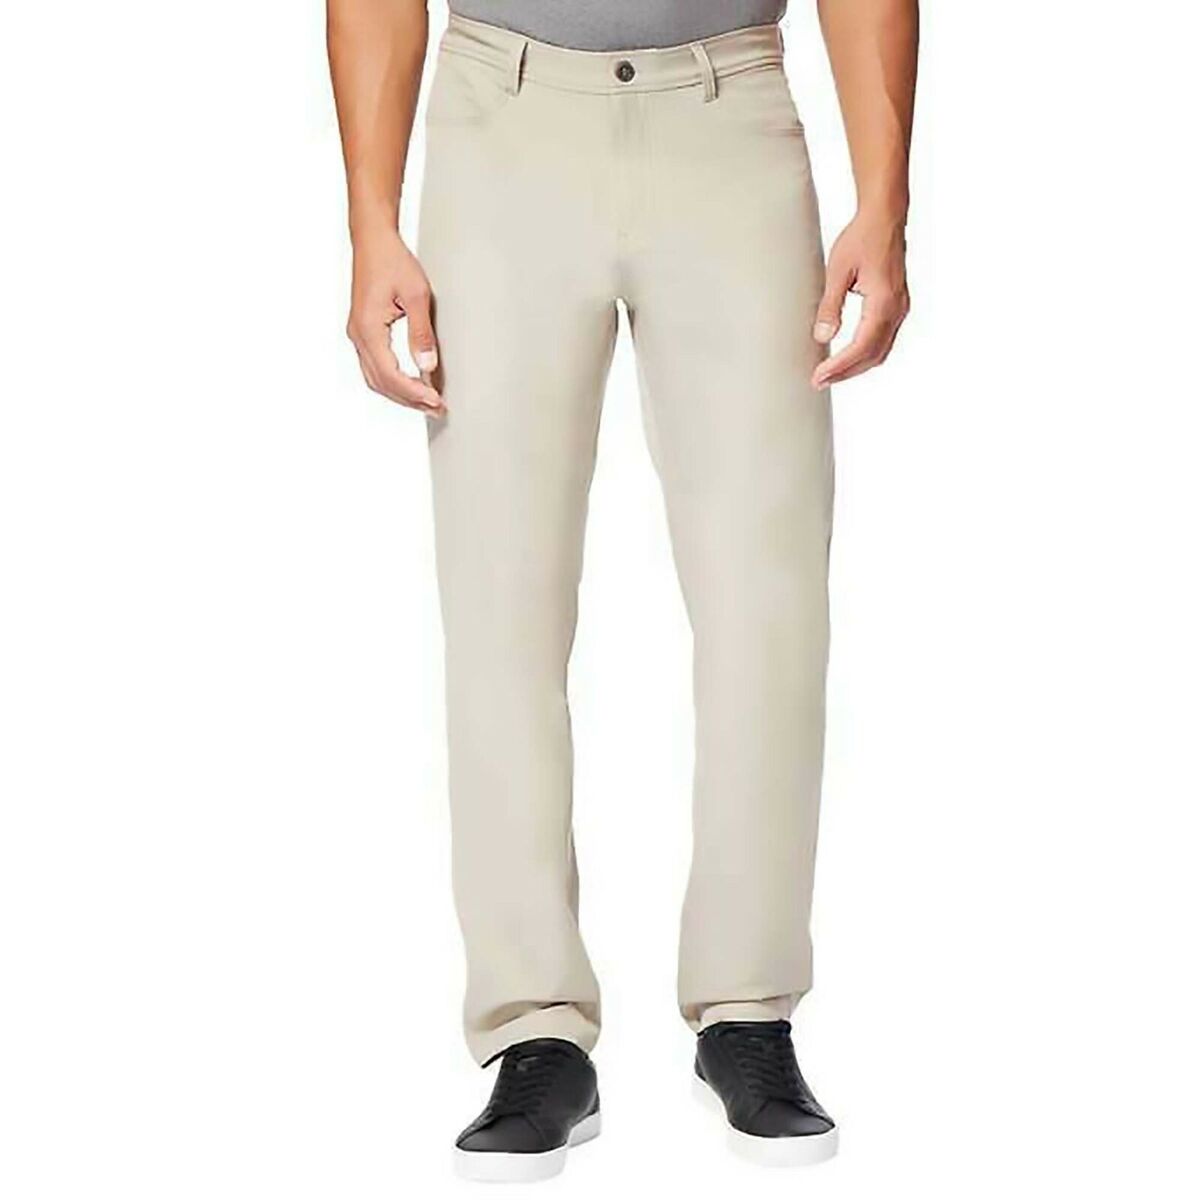 32 Degrees Cool Men's Tweed 5-Pocket Soft Stretch Pants, TAN, Size 38 X 34